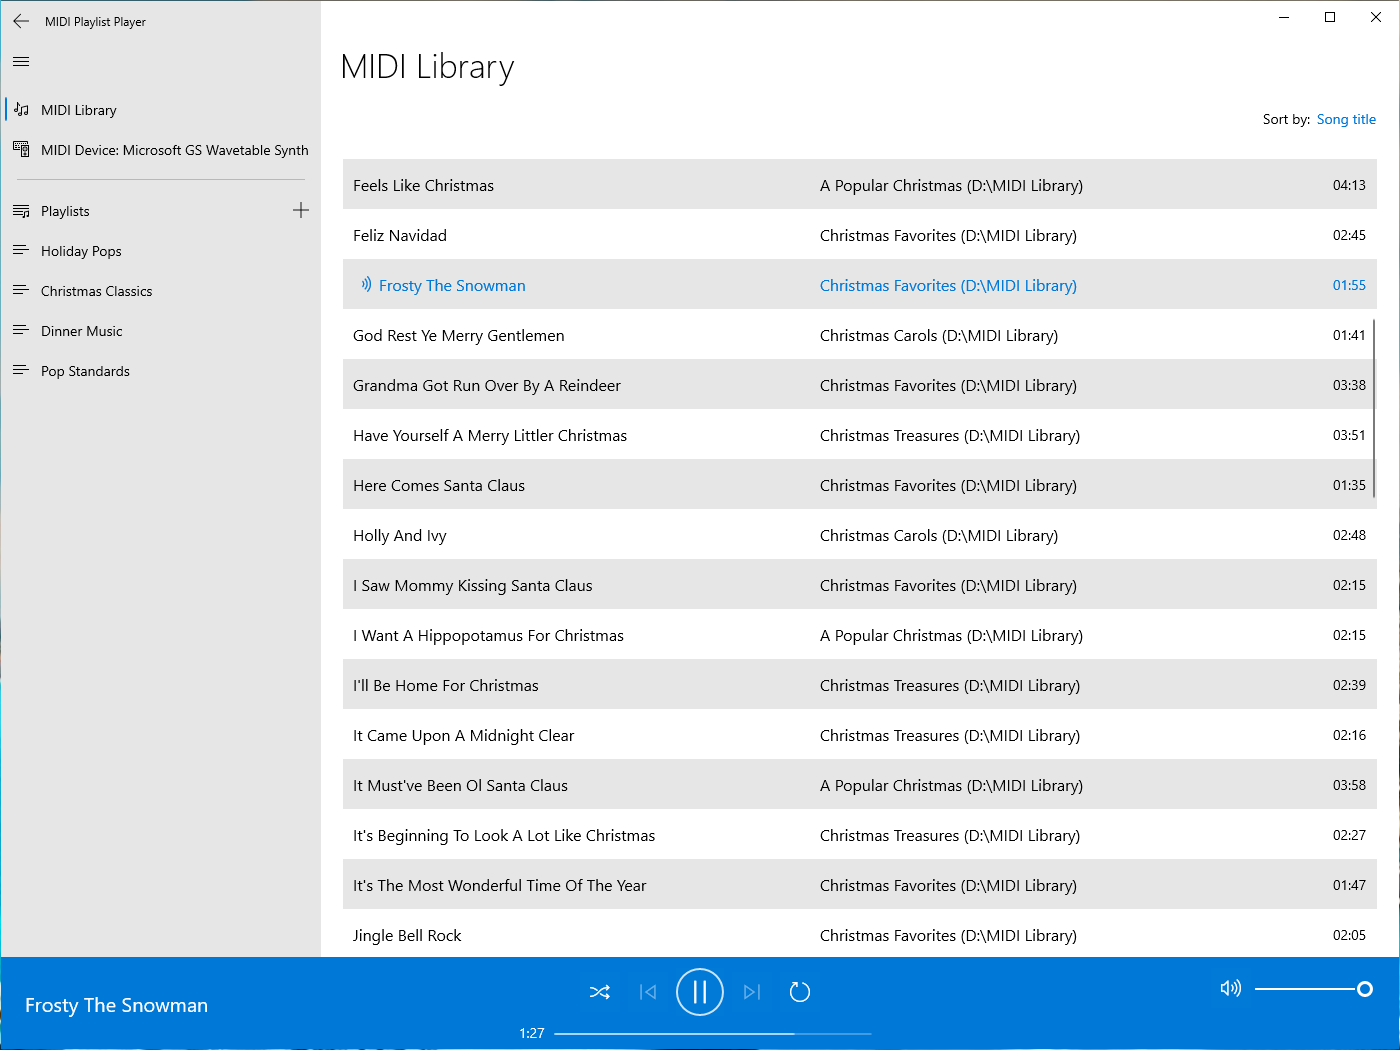 MIDI Library view